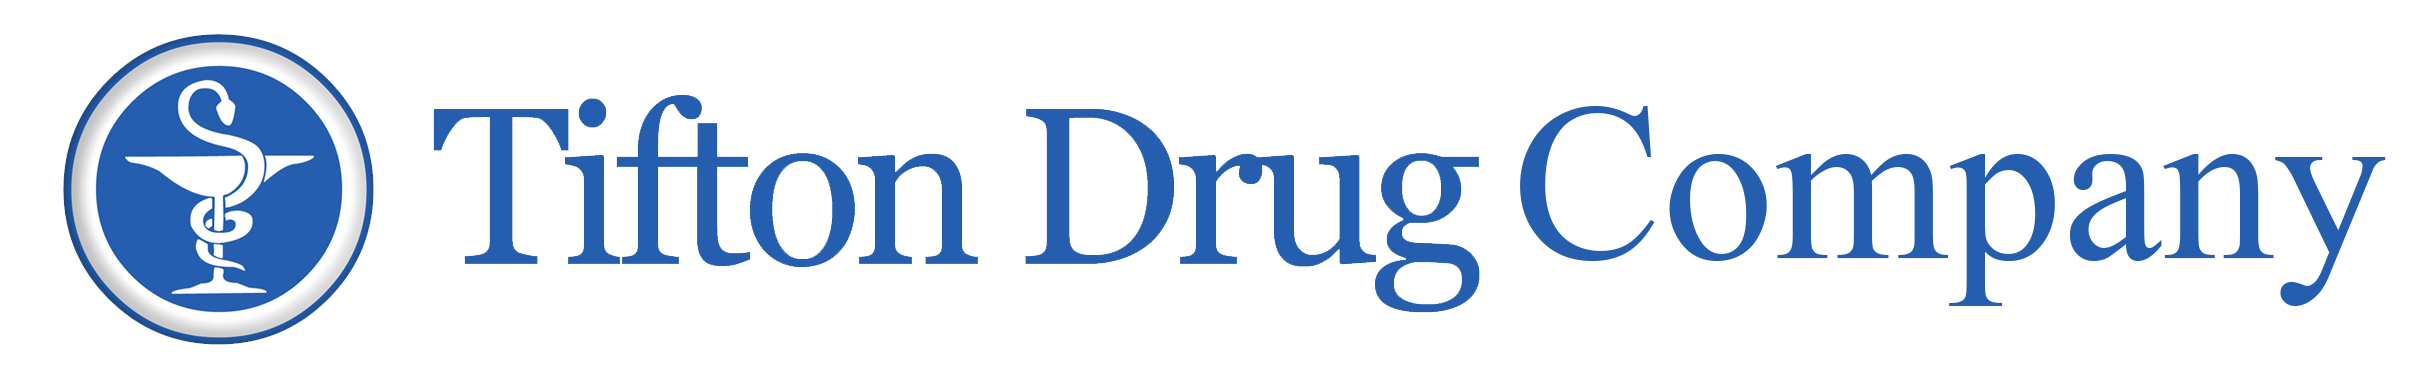 Redesign - Tifton Drug Company